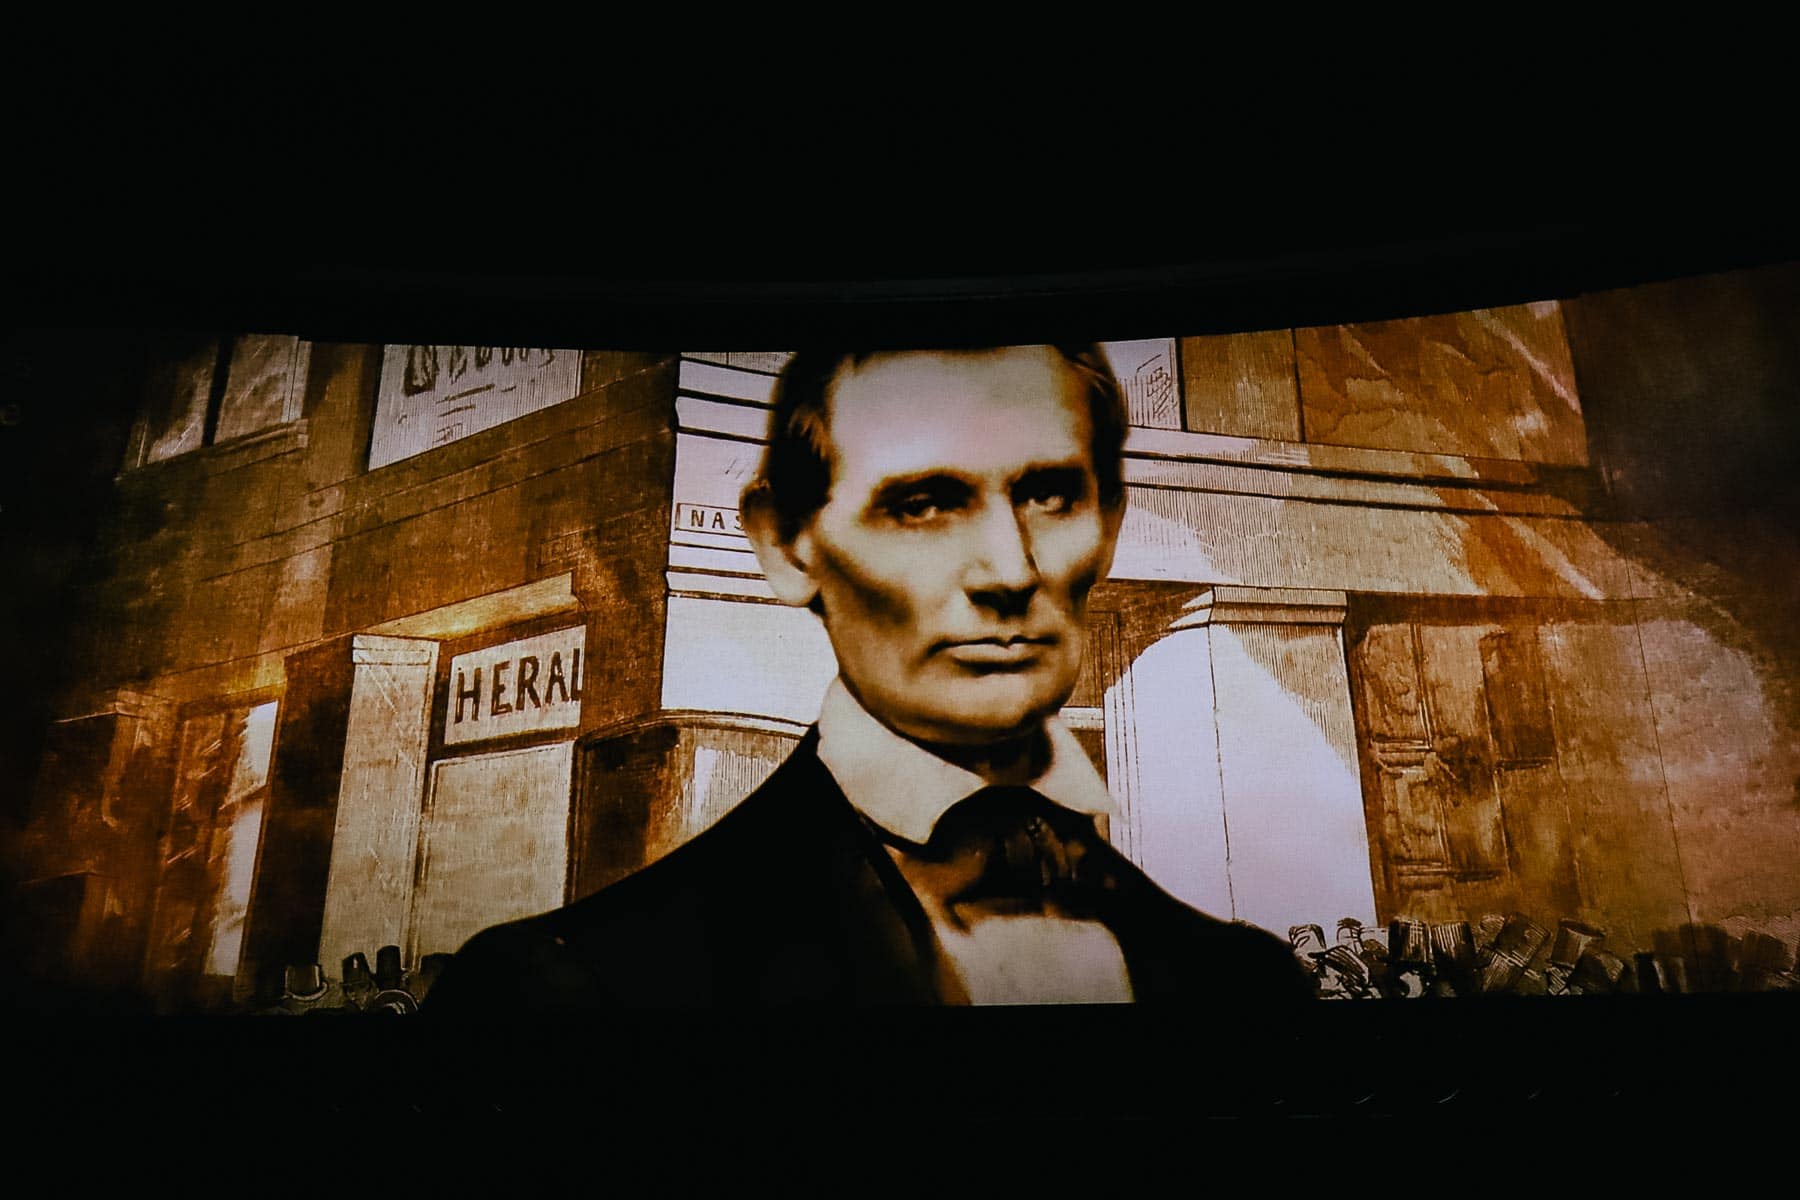 A portrait of Abraham Lincoln 